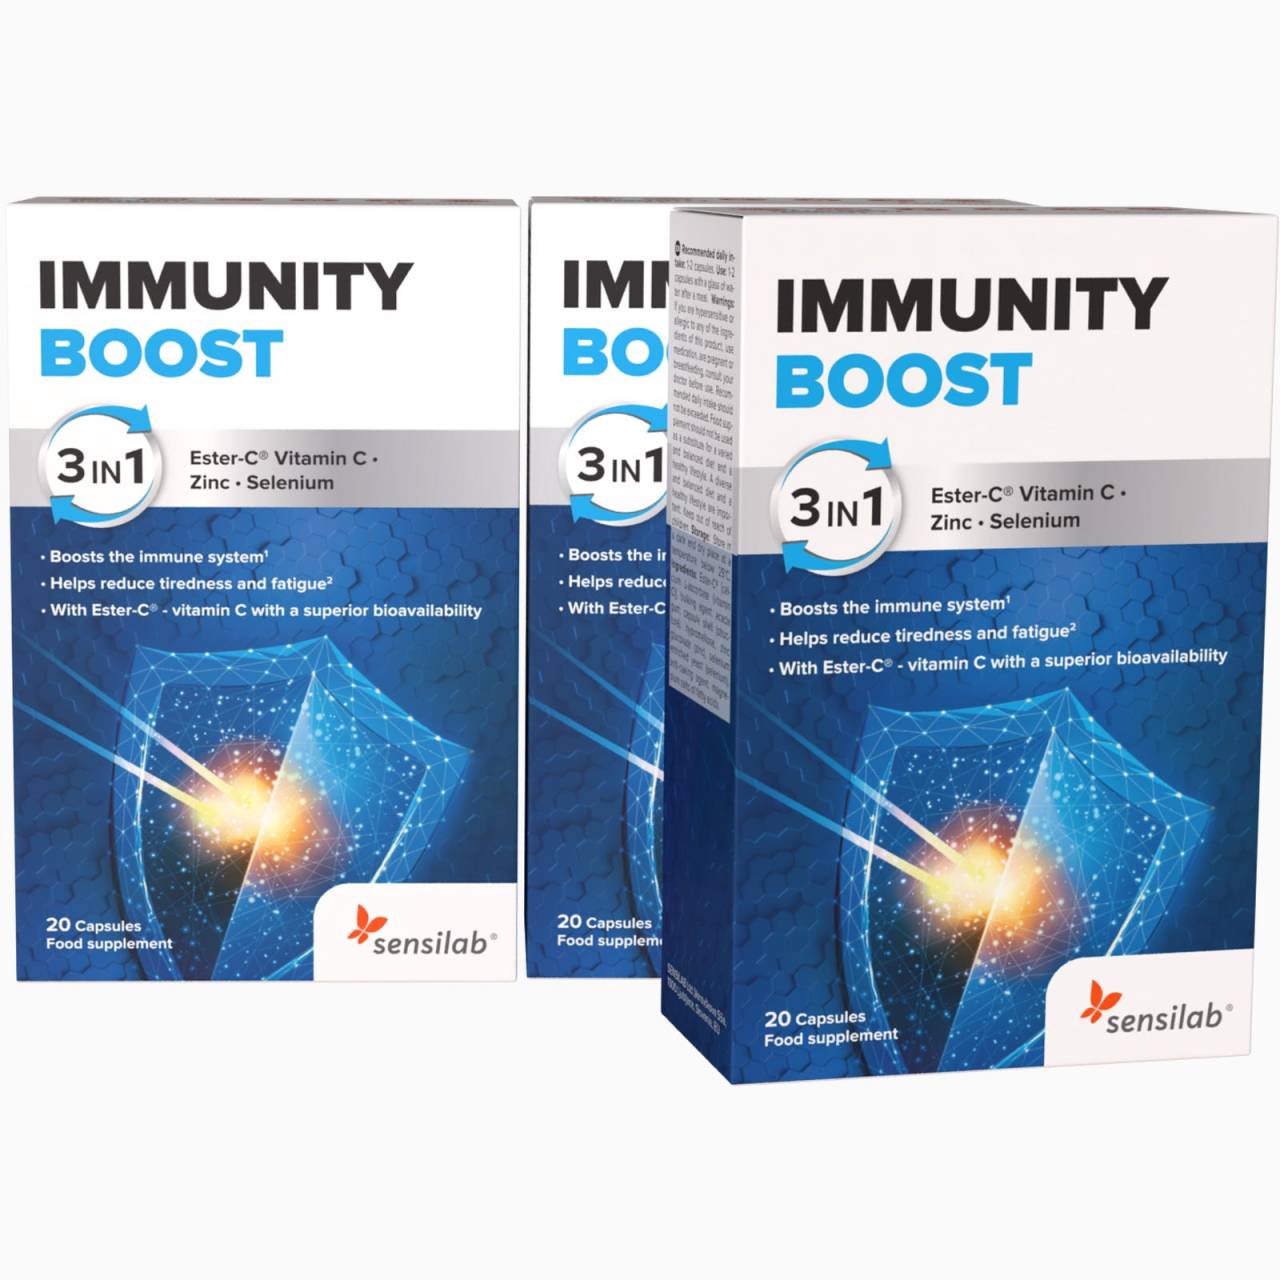 Immunity Boost - immune system booster 1+2 FREE.